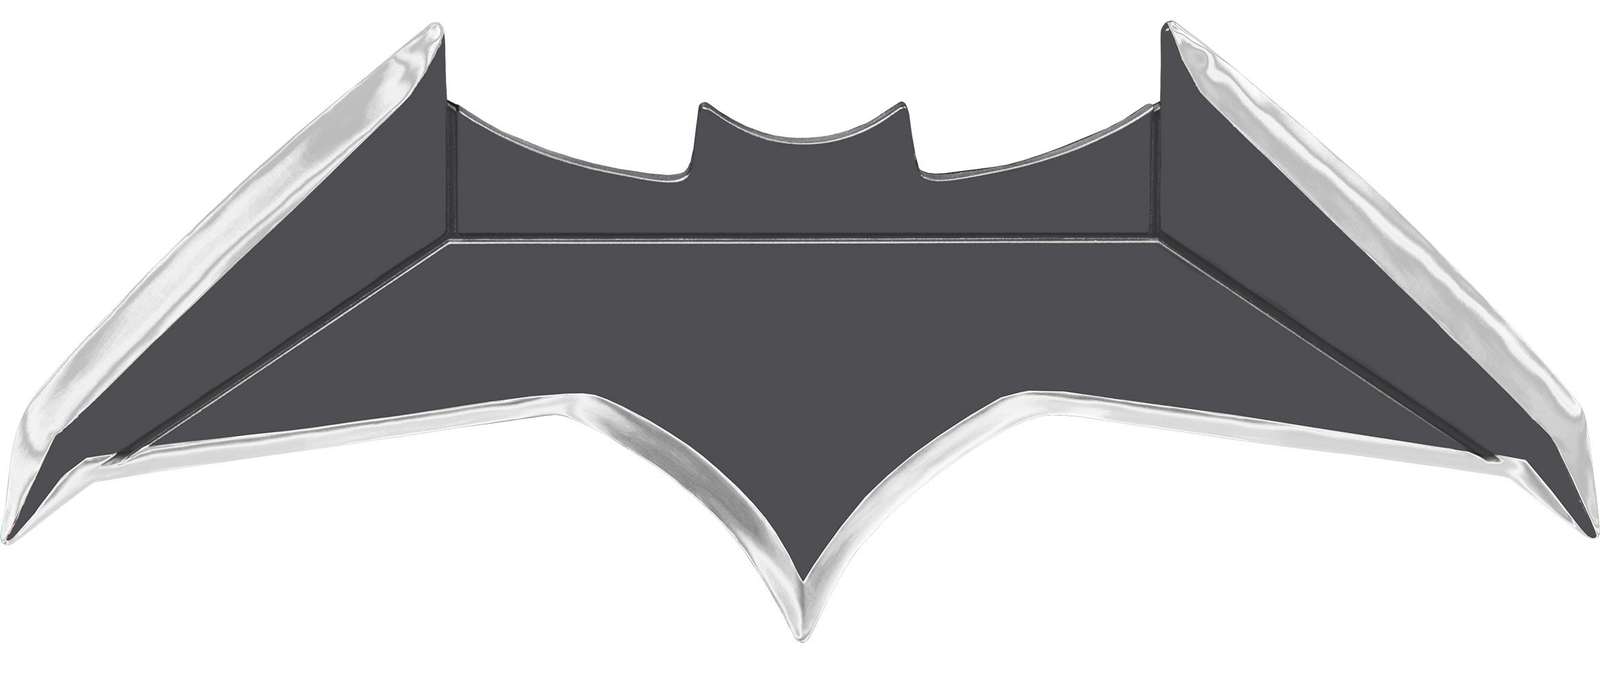 Batarang puzzle online ze zdjęcia